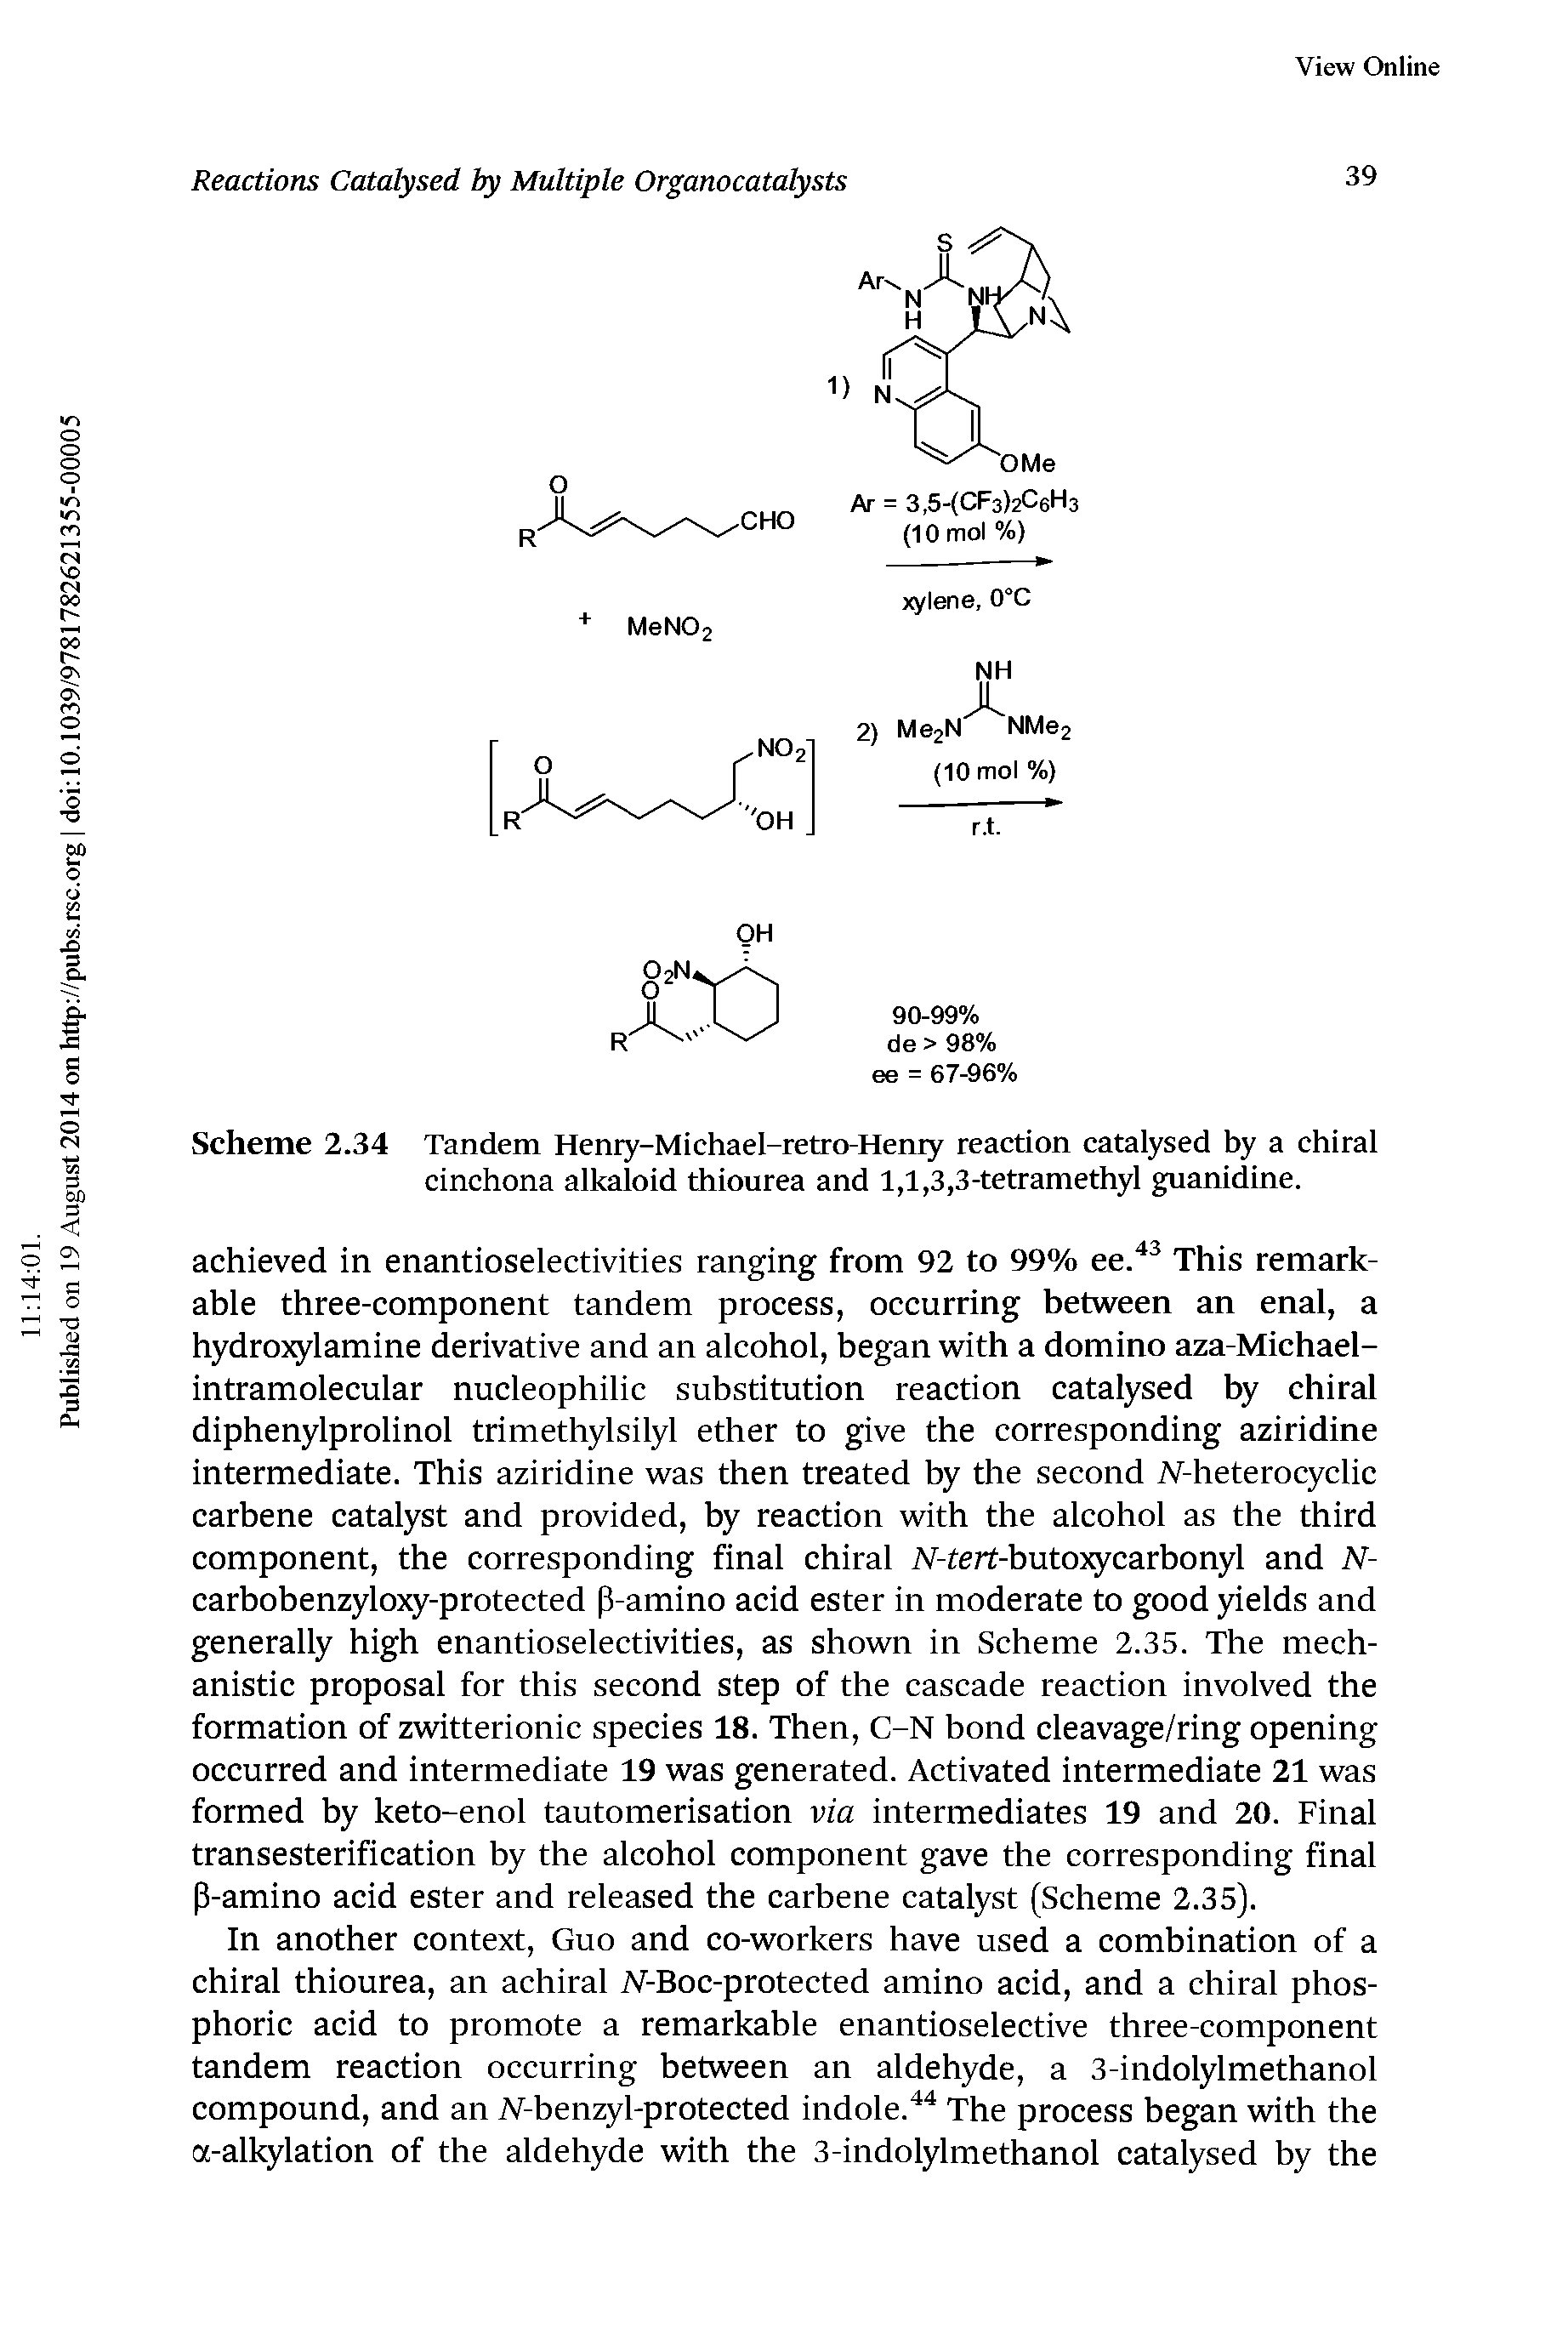 Scheme 2.34 Tandem Henry-Michael-retro-Heniy reaction catalysed by a chiral cinchona alkaloid thiourea and 1,1,3,3-tetramethyl guanidine.